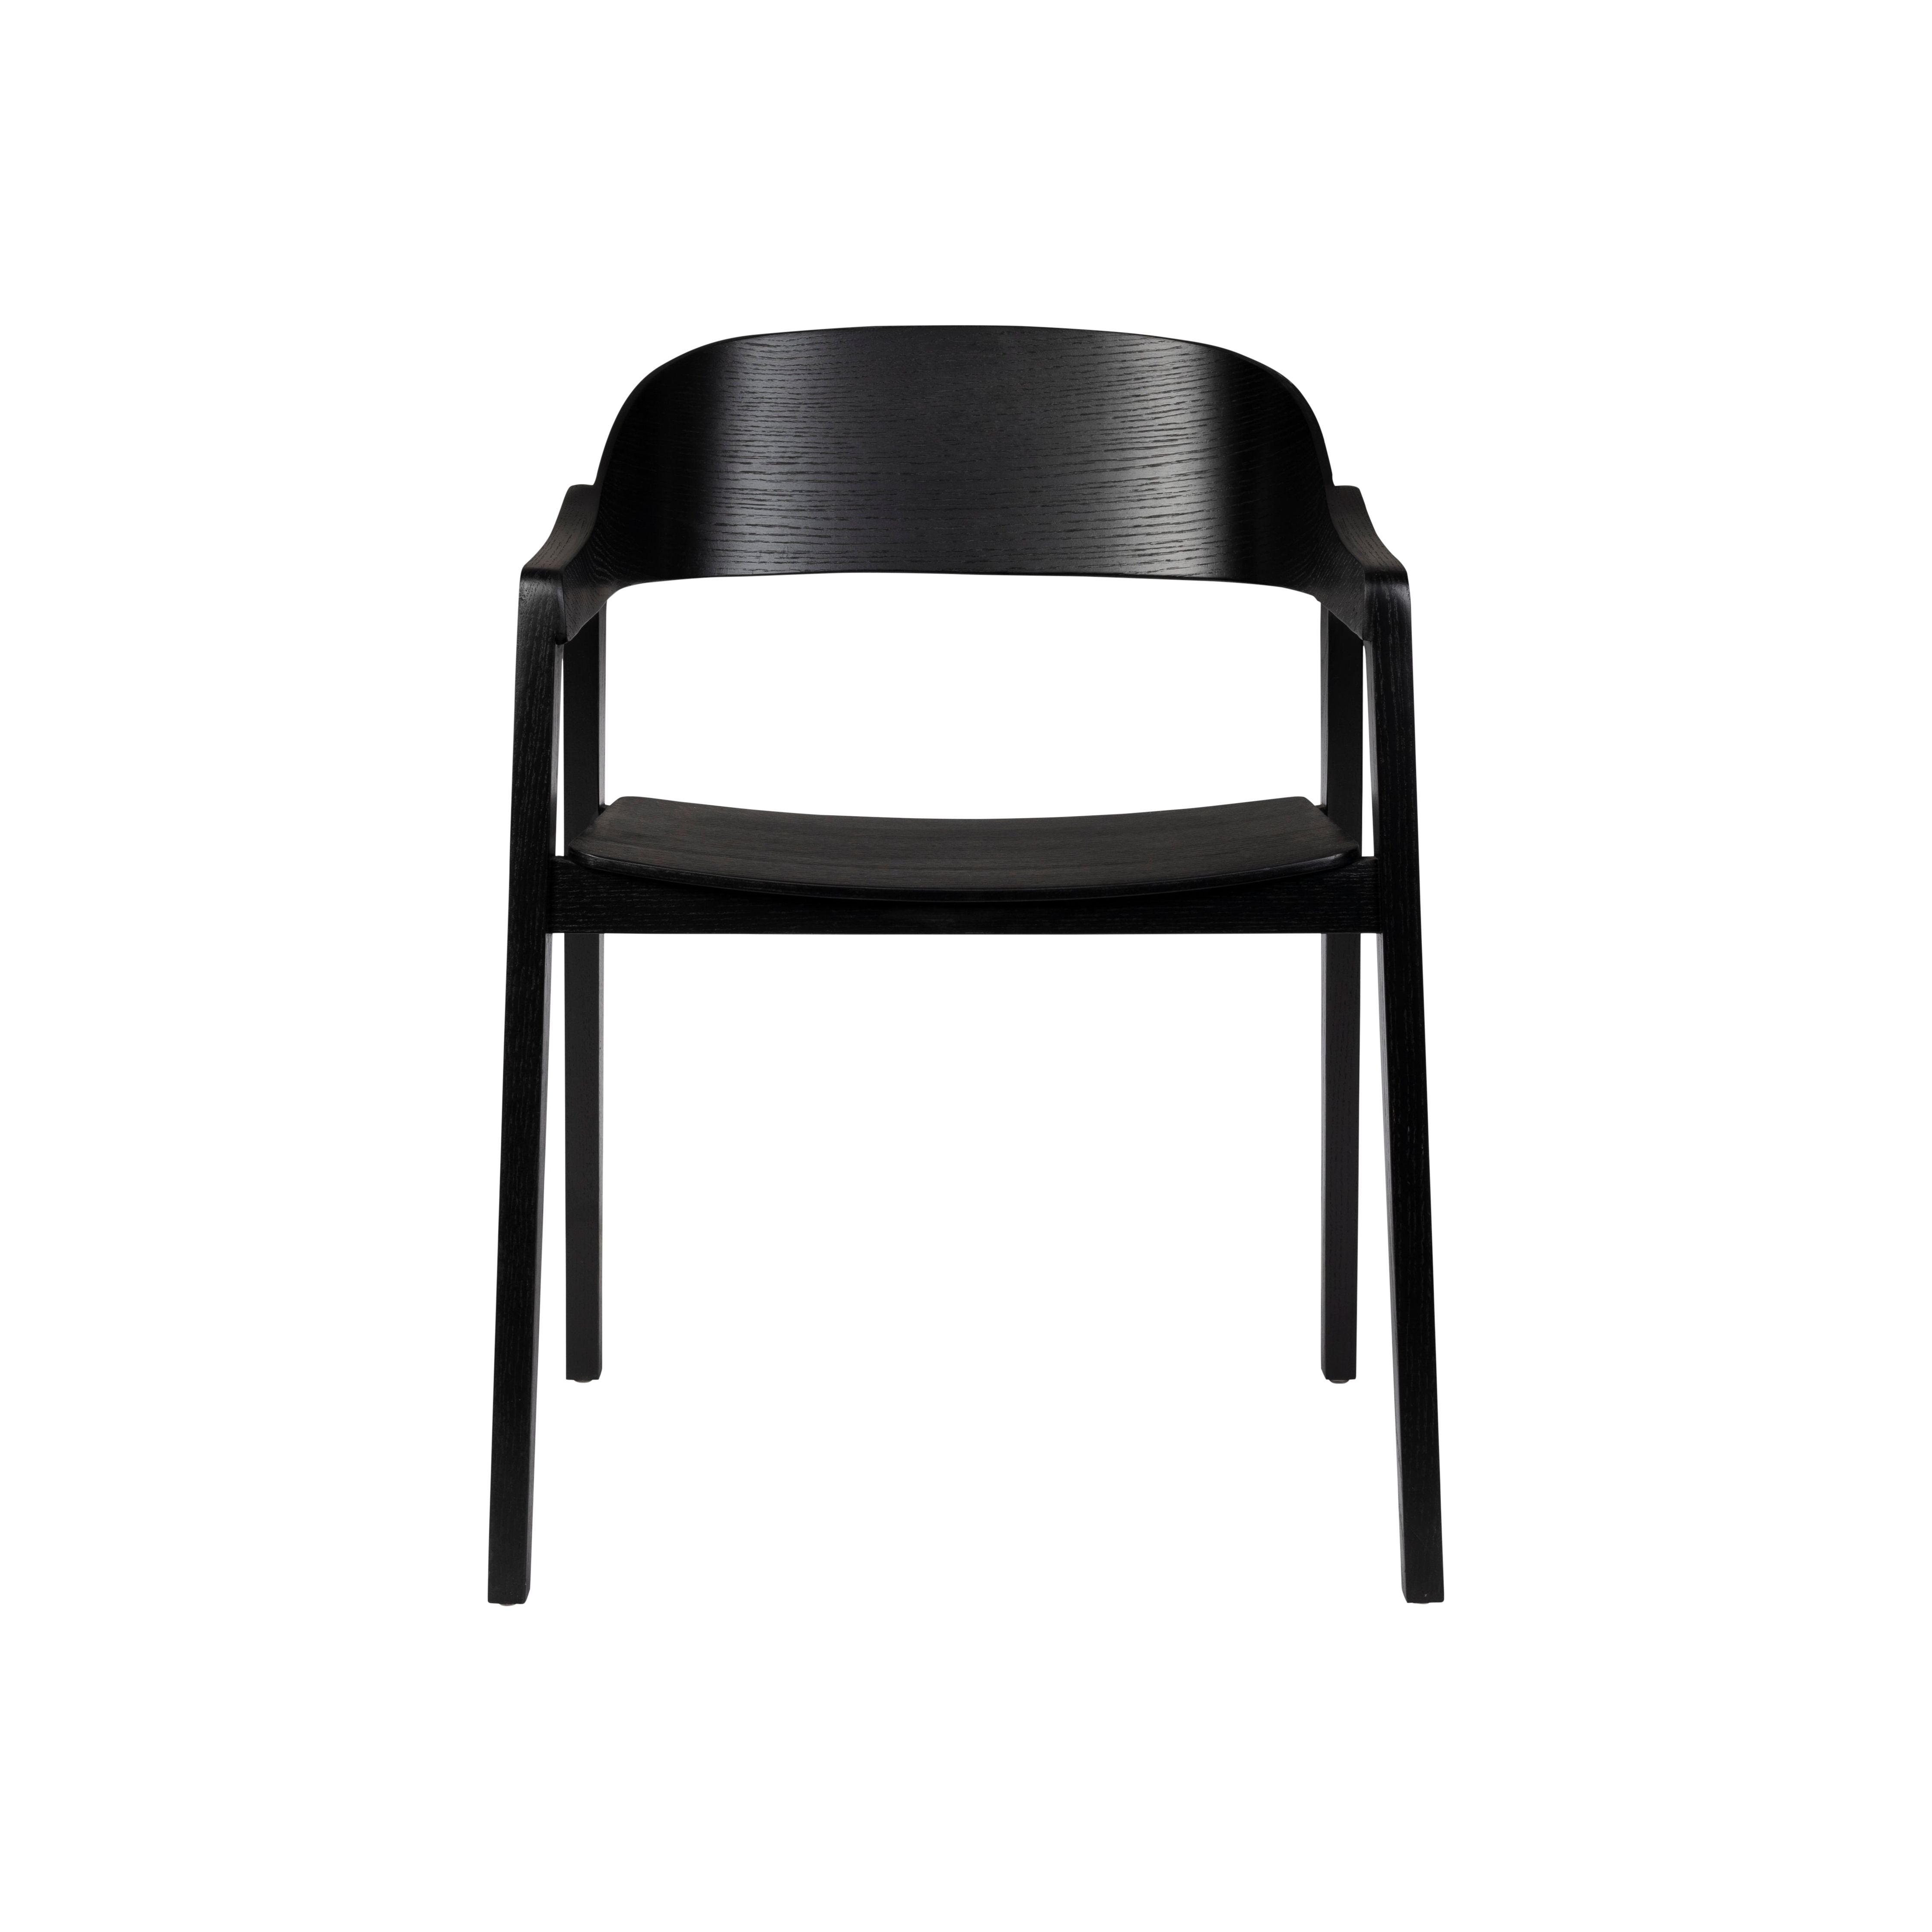 Chair westlake black | 2 pieces